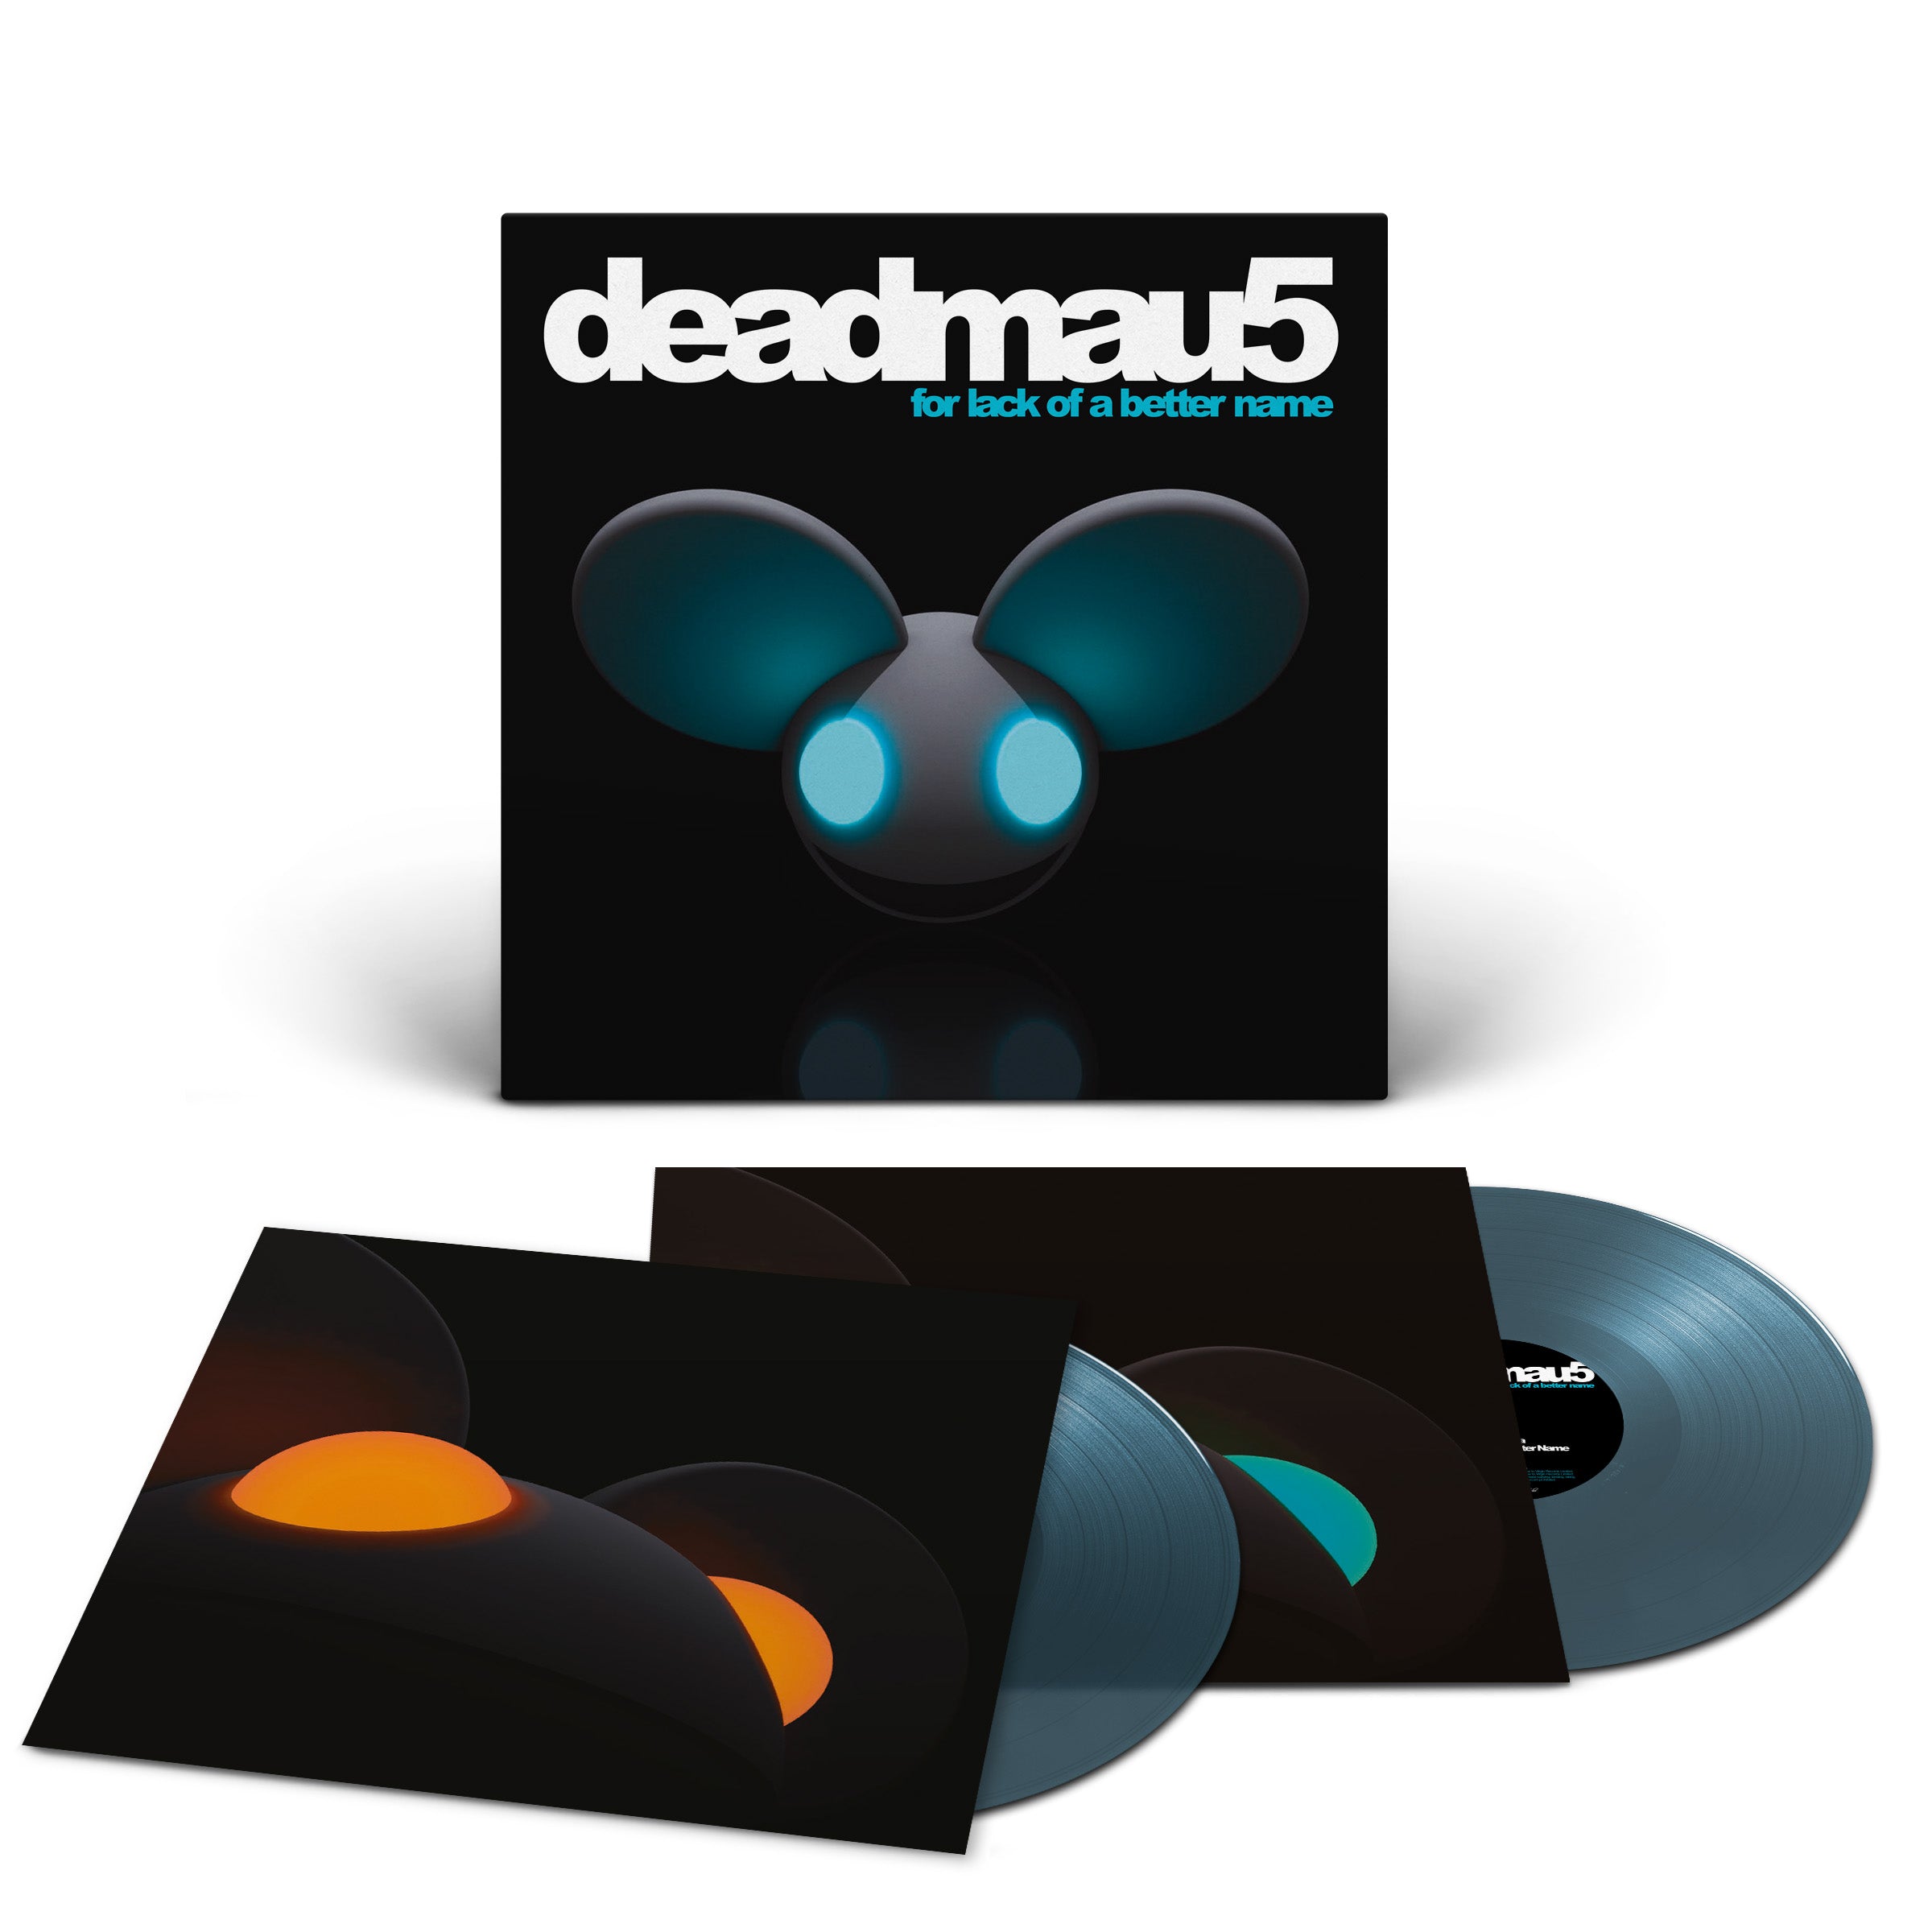 deadmau5 - for lack of a better name vinyl